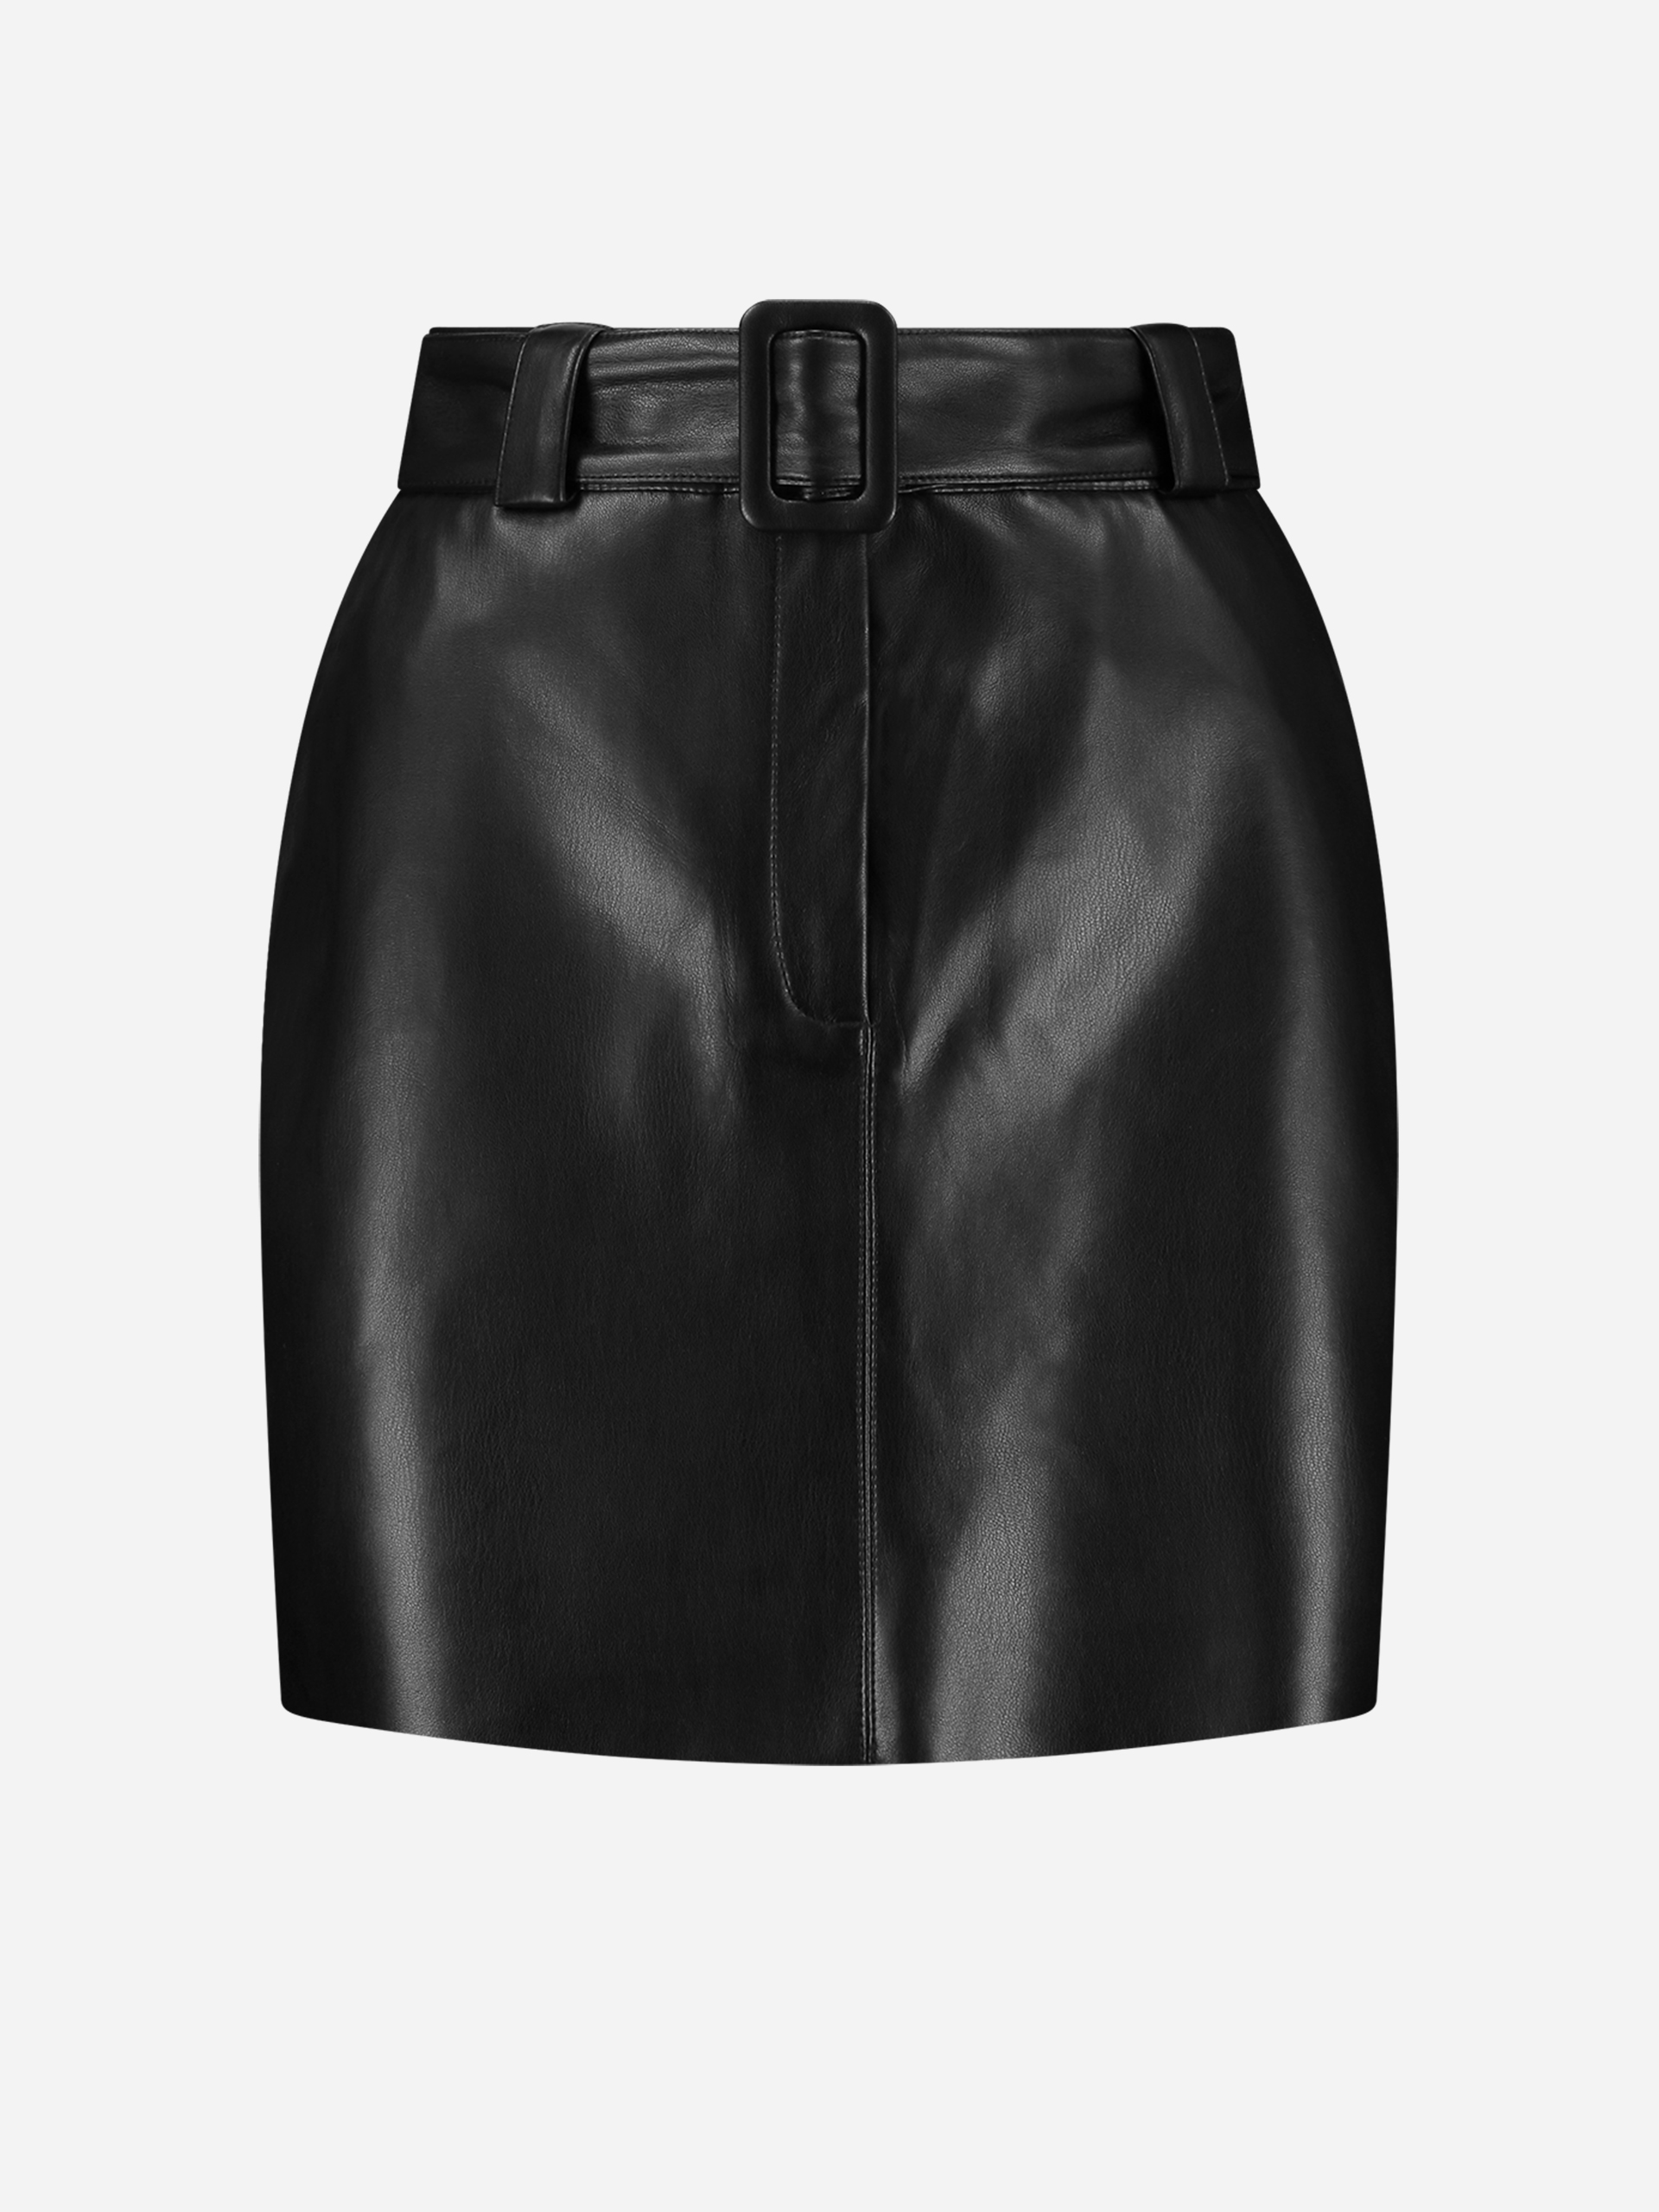 Vegan leather skirt with belt